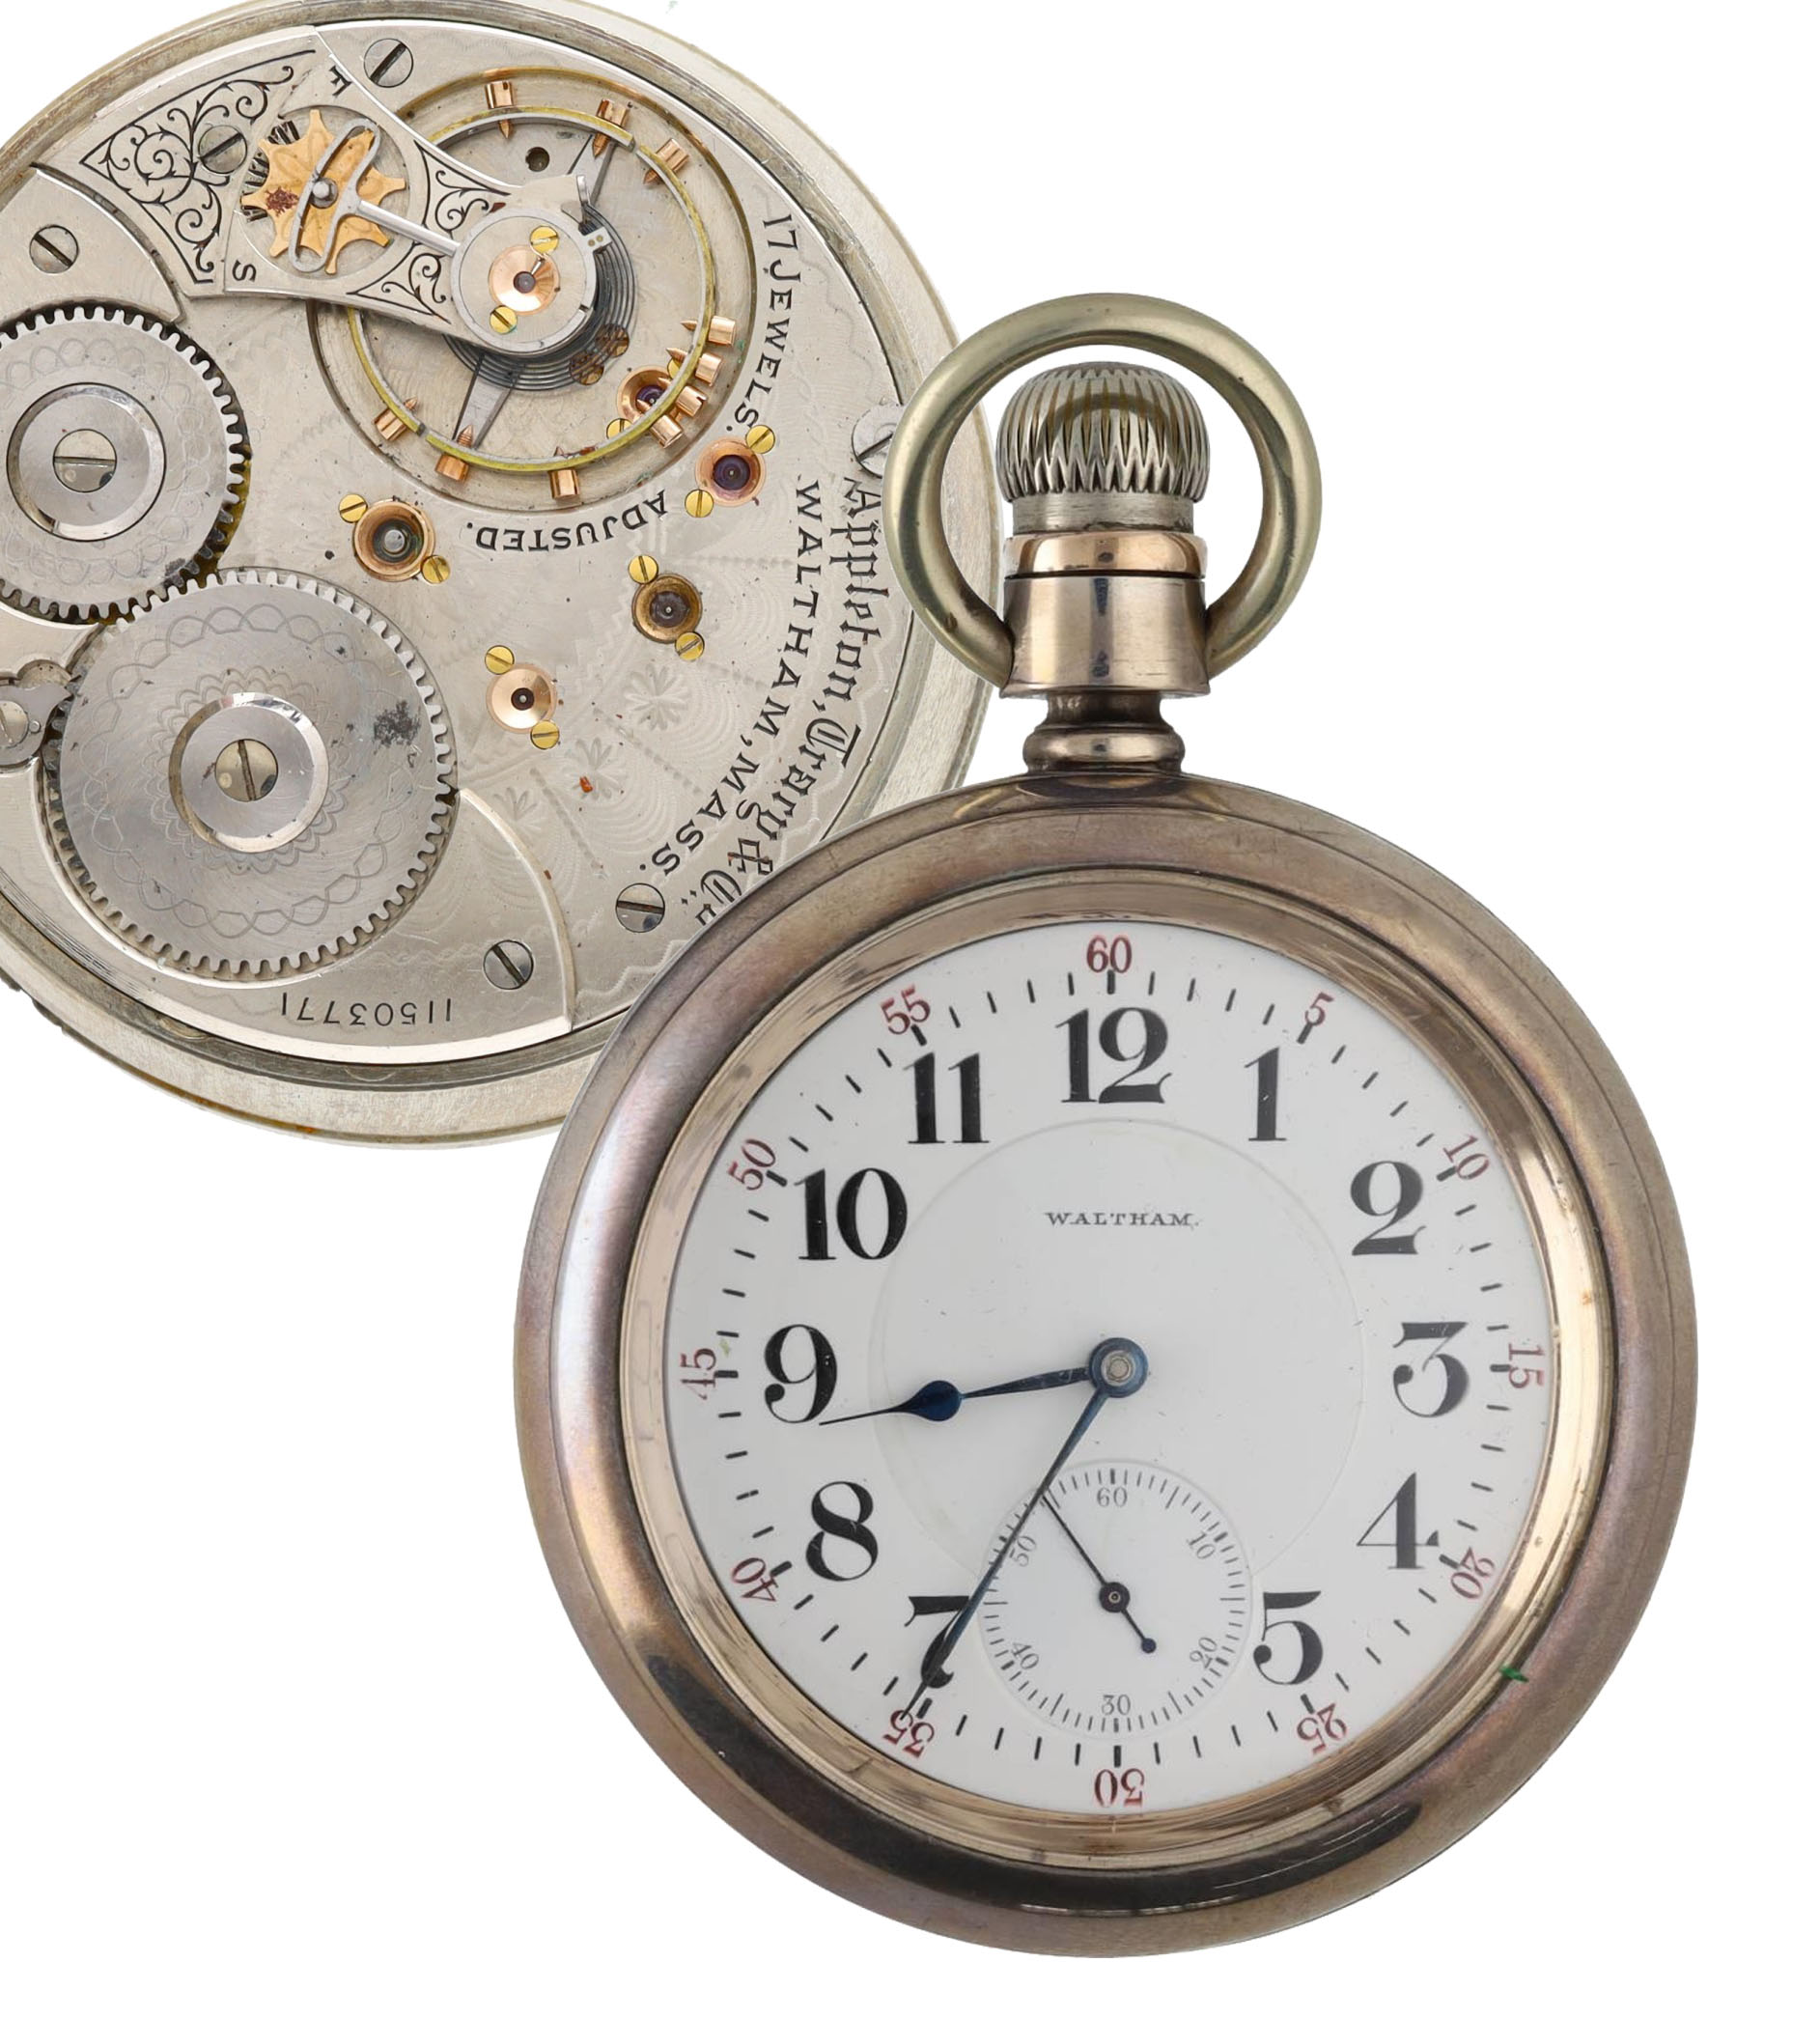 American Waltham 'Appleton Tracy & Co.' lever set pocket watch, circa 1902, serial no. 11503771,